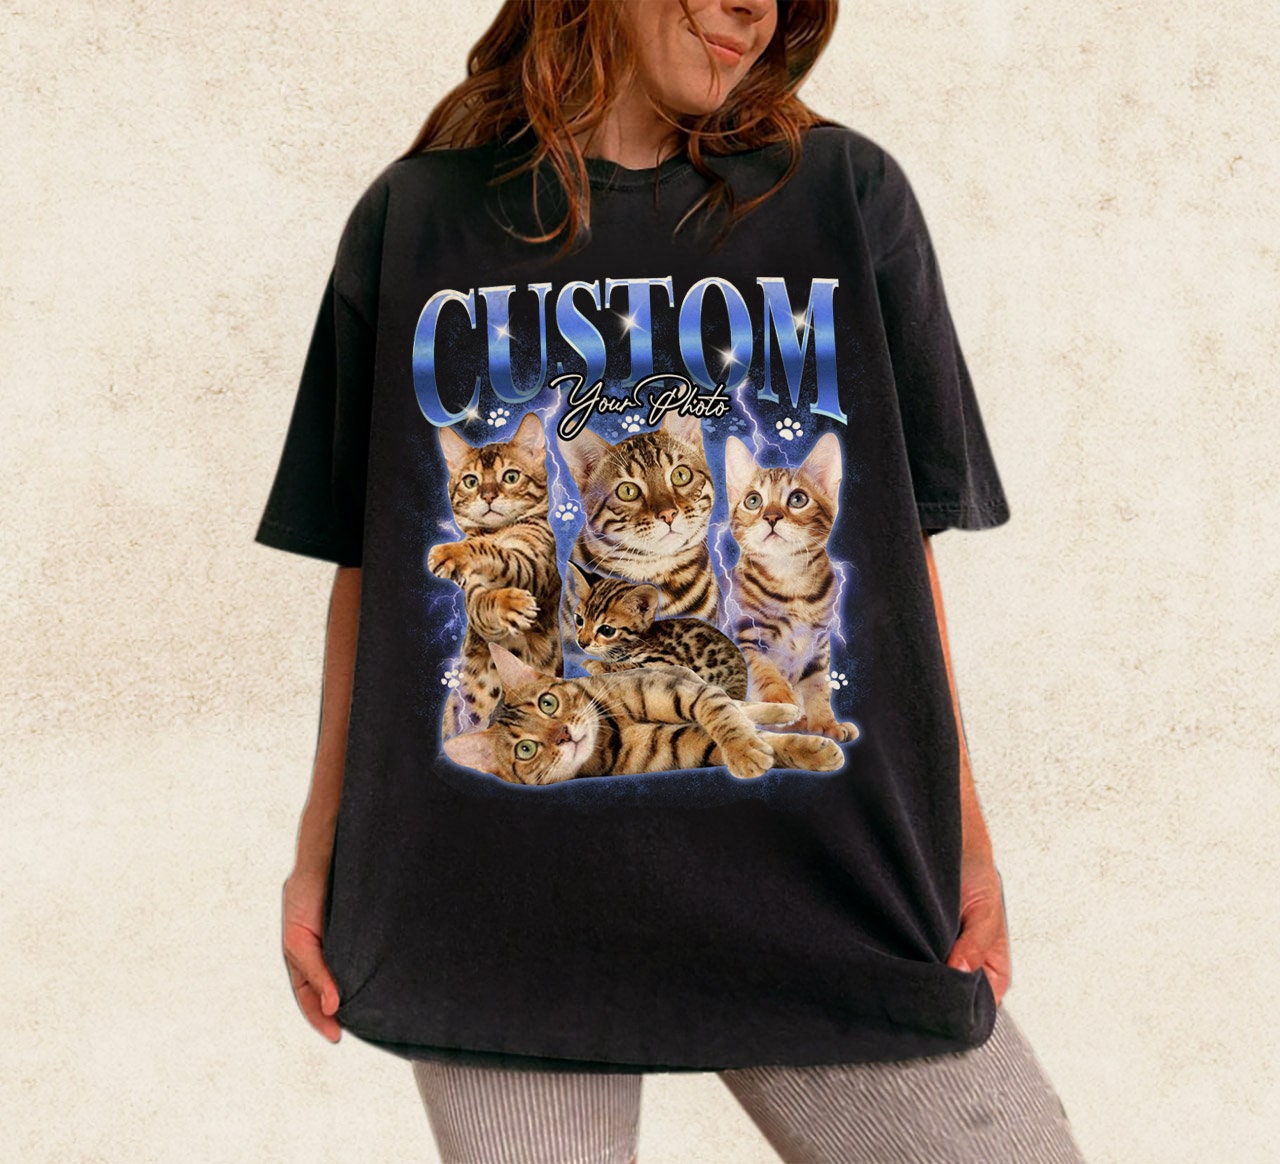 Discover Camiseta Personalizada Fotos de Gato y Perro, Camiseta Personalizada de Mascota, Diseño Personalizable